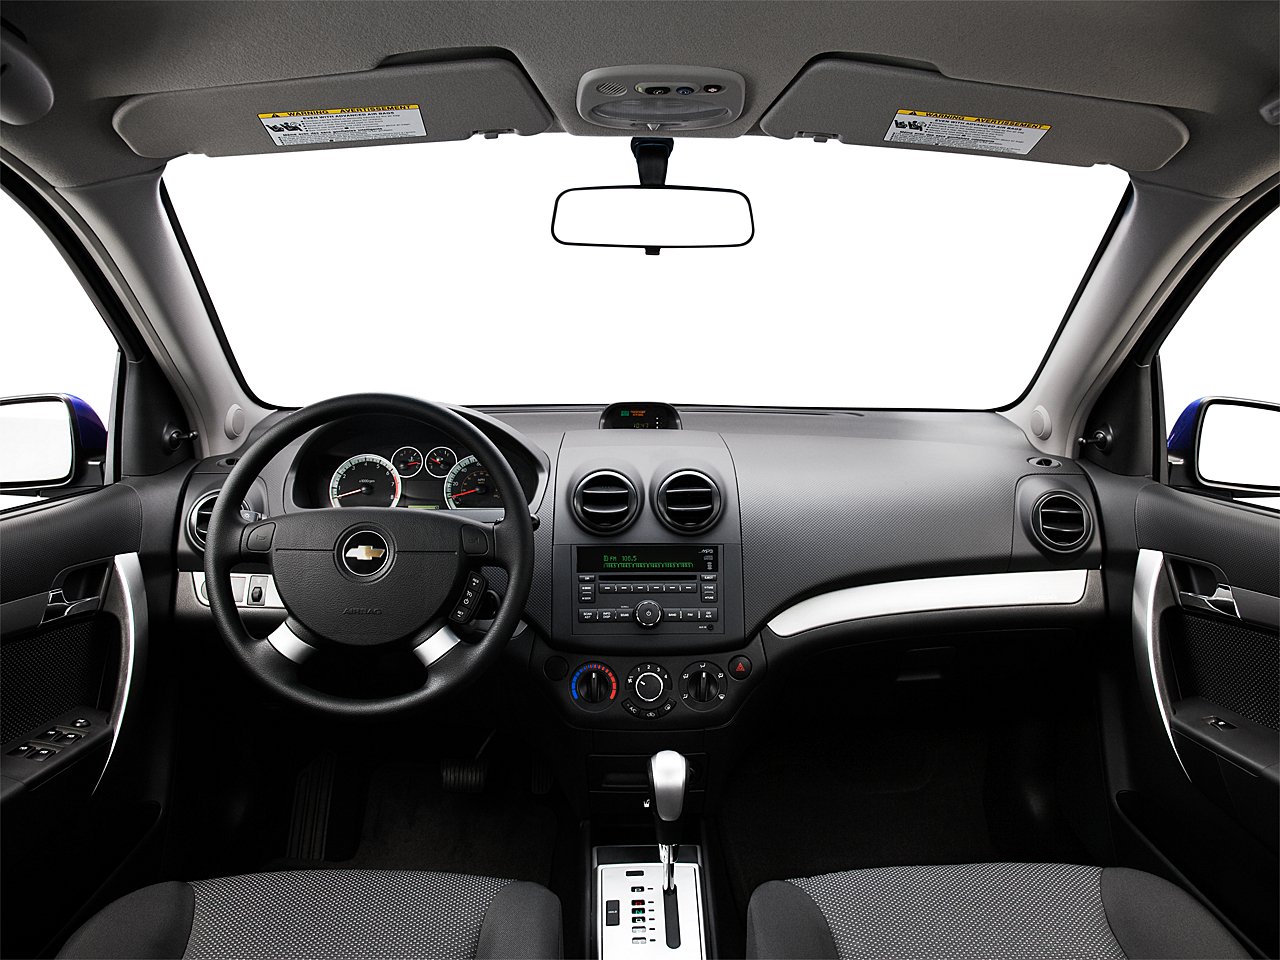 2009 Chevrolet Aveo LT 4dr Sedan - Research - GrooveCar